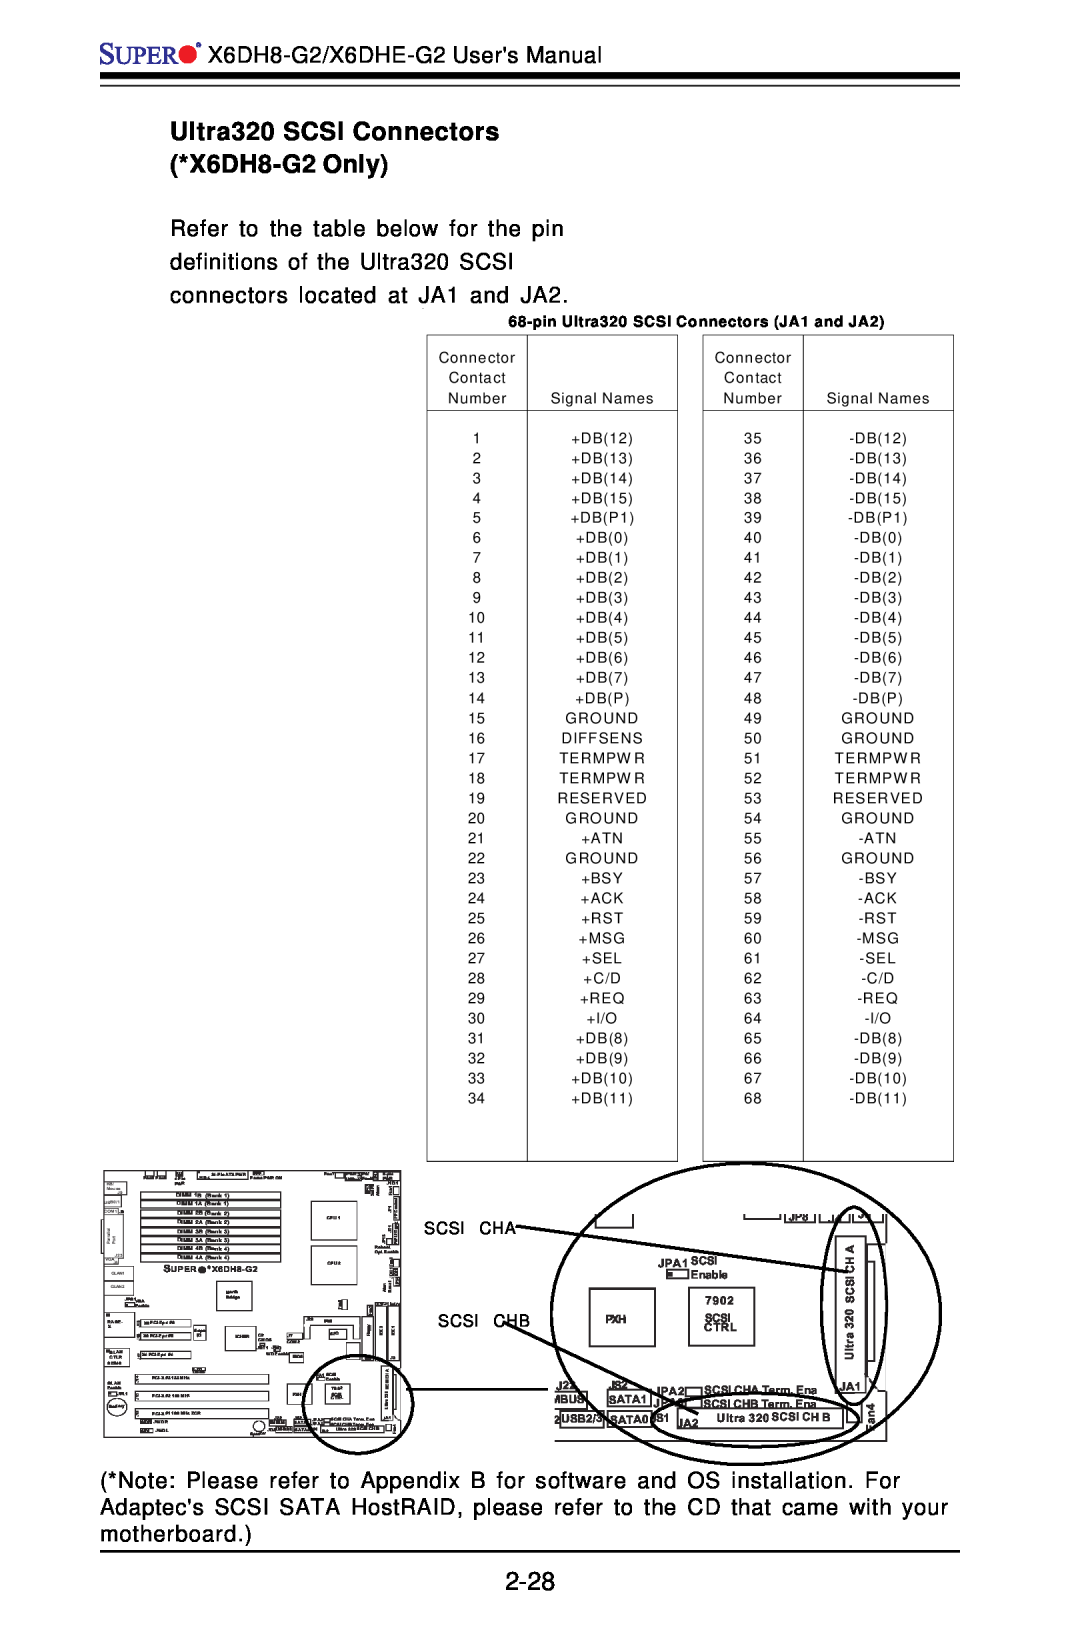 SUPER MICRO Computer X6DHE-G2 manual Ultra320 SCSI Connectors X6DH8-G2 Only, Scsi Cha, Scsi Chb 